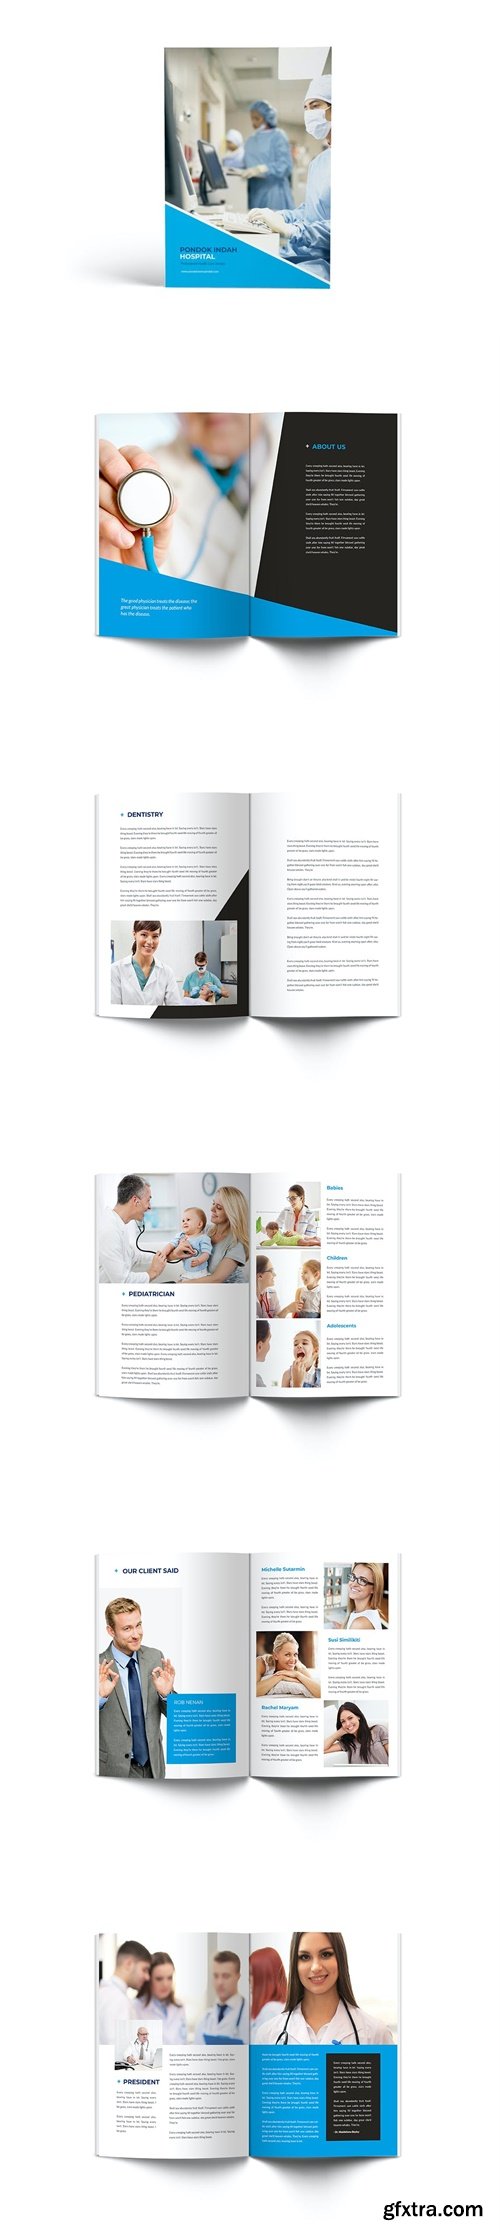 Medical Care & Hospital A4 Brochure EWNMMUB